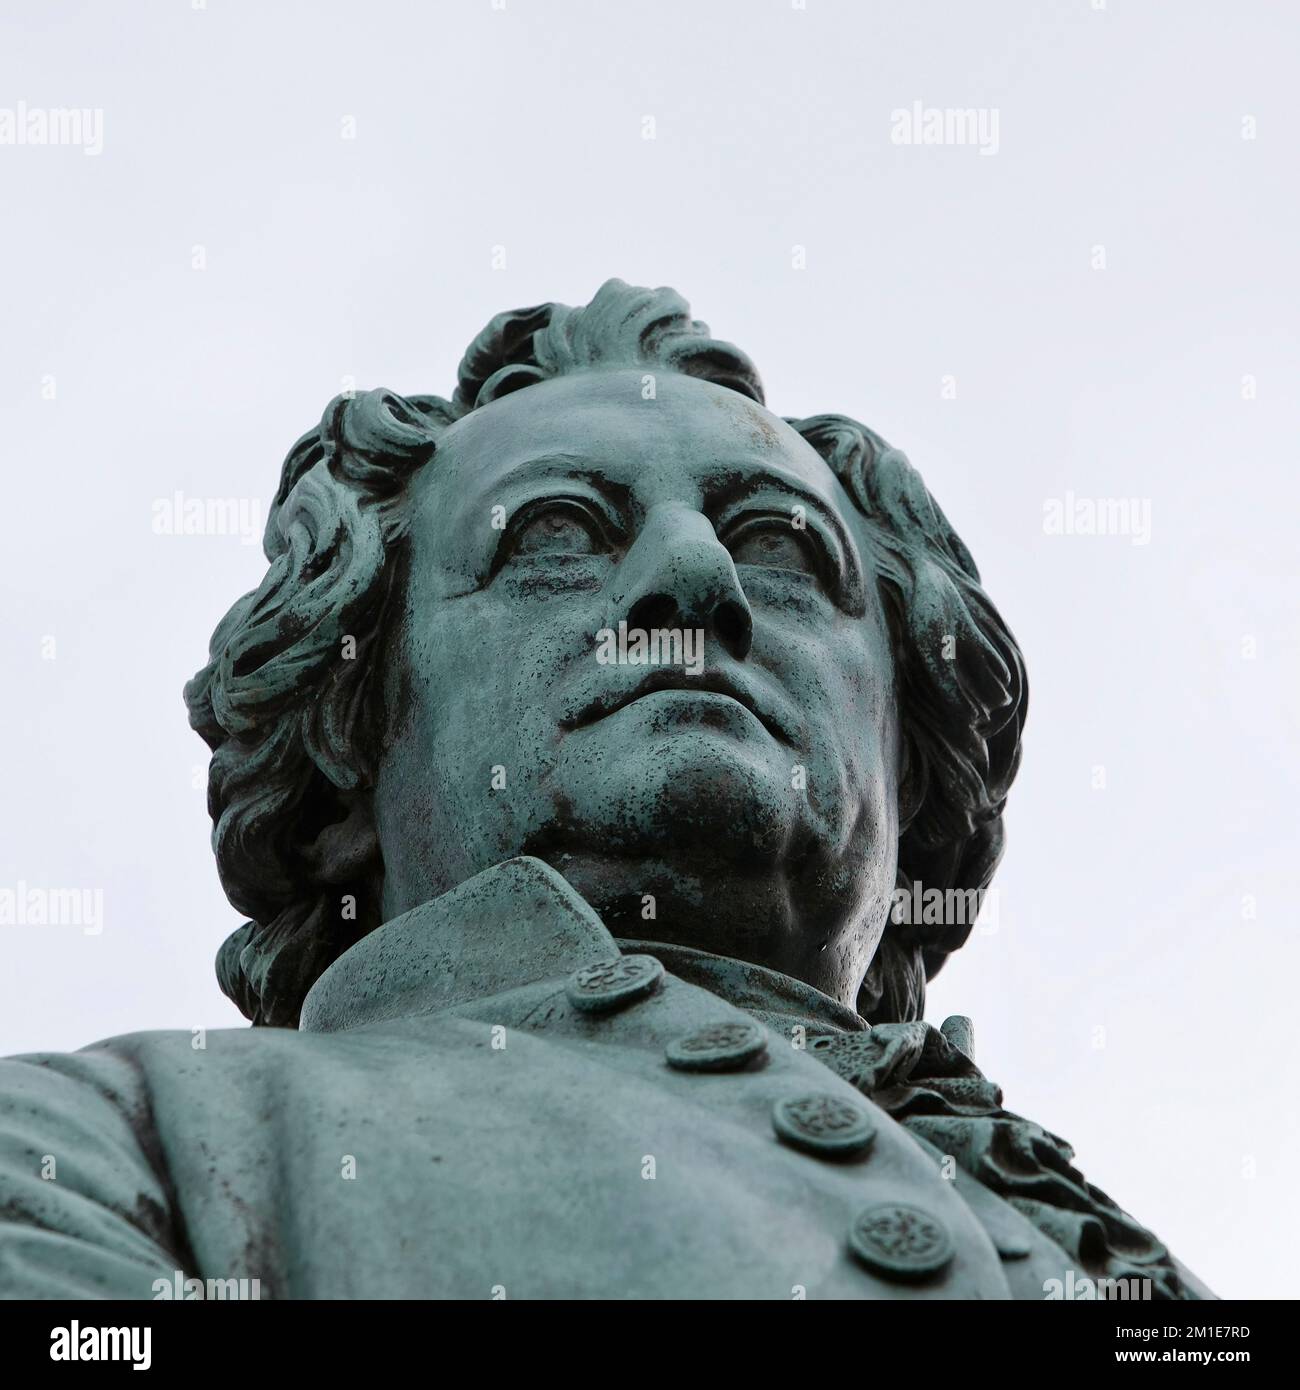 Johann Wolfgang von Goethe, portrait, double statue Goethe-Schiller monument, sculptor Ernst Rietschel, Weimar, Thuringia, Germany, Europe Stock Photo